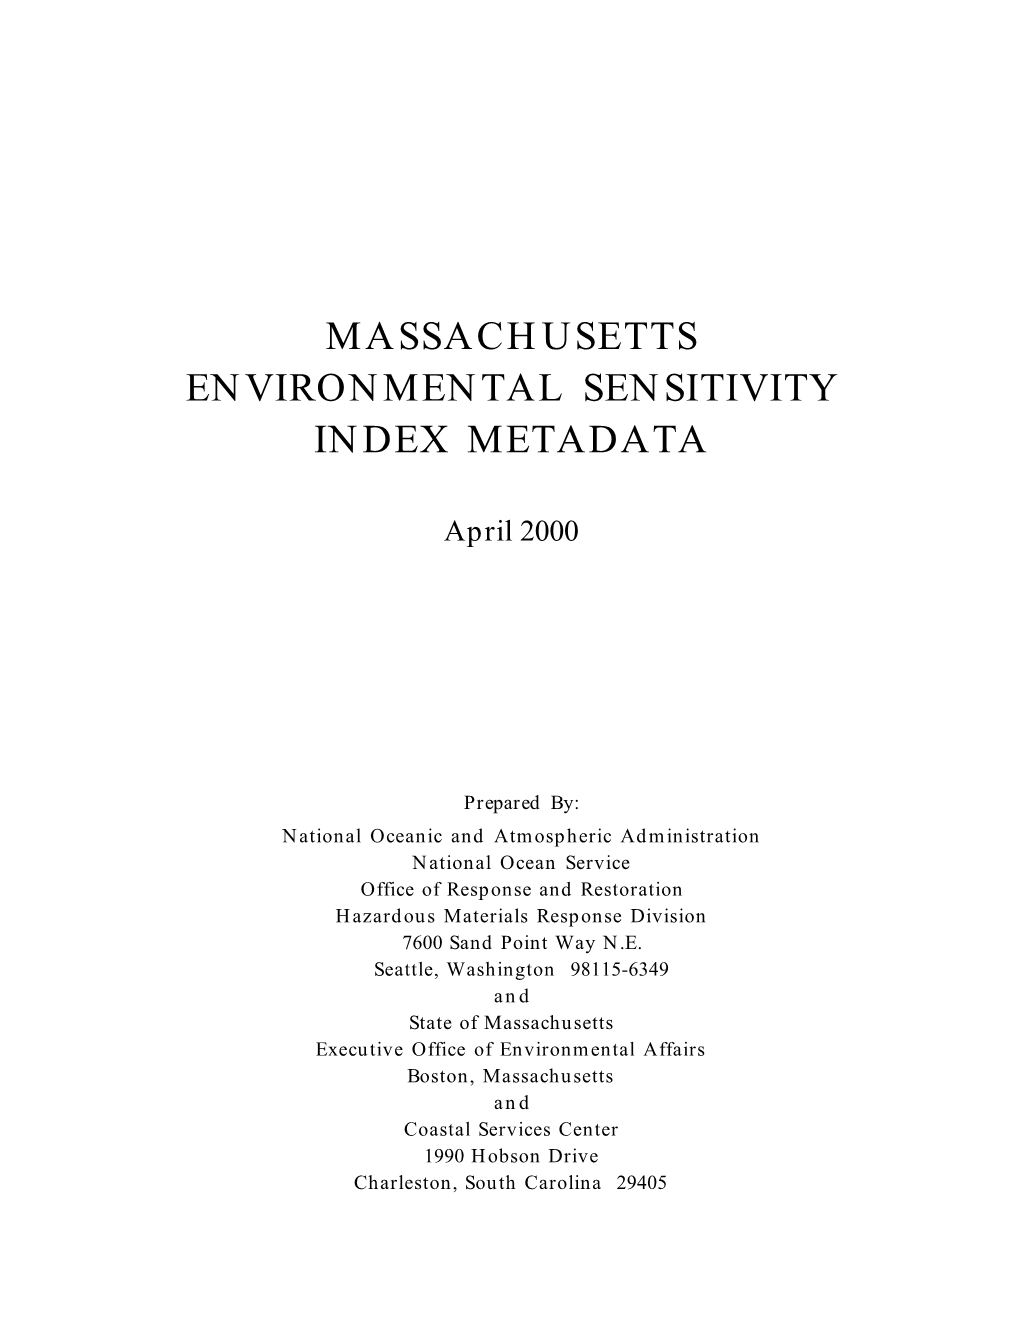 Massachusetts Environmental Sensitivity Index Metadata